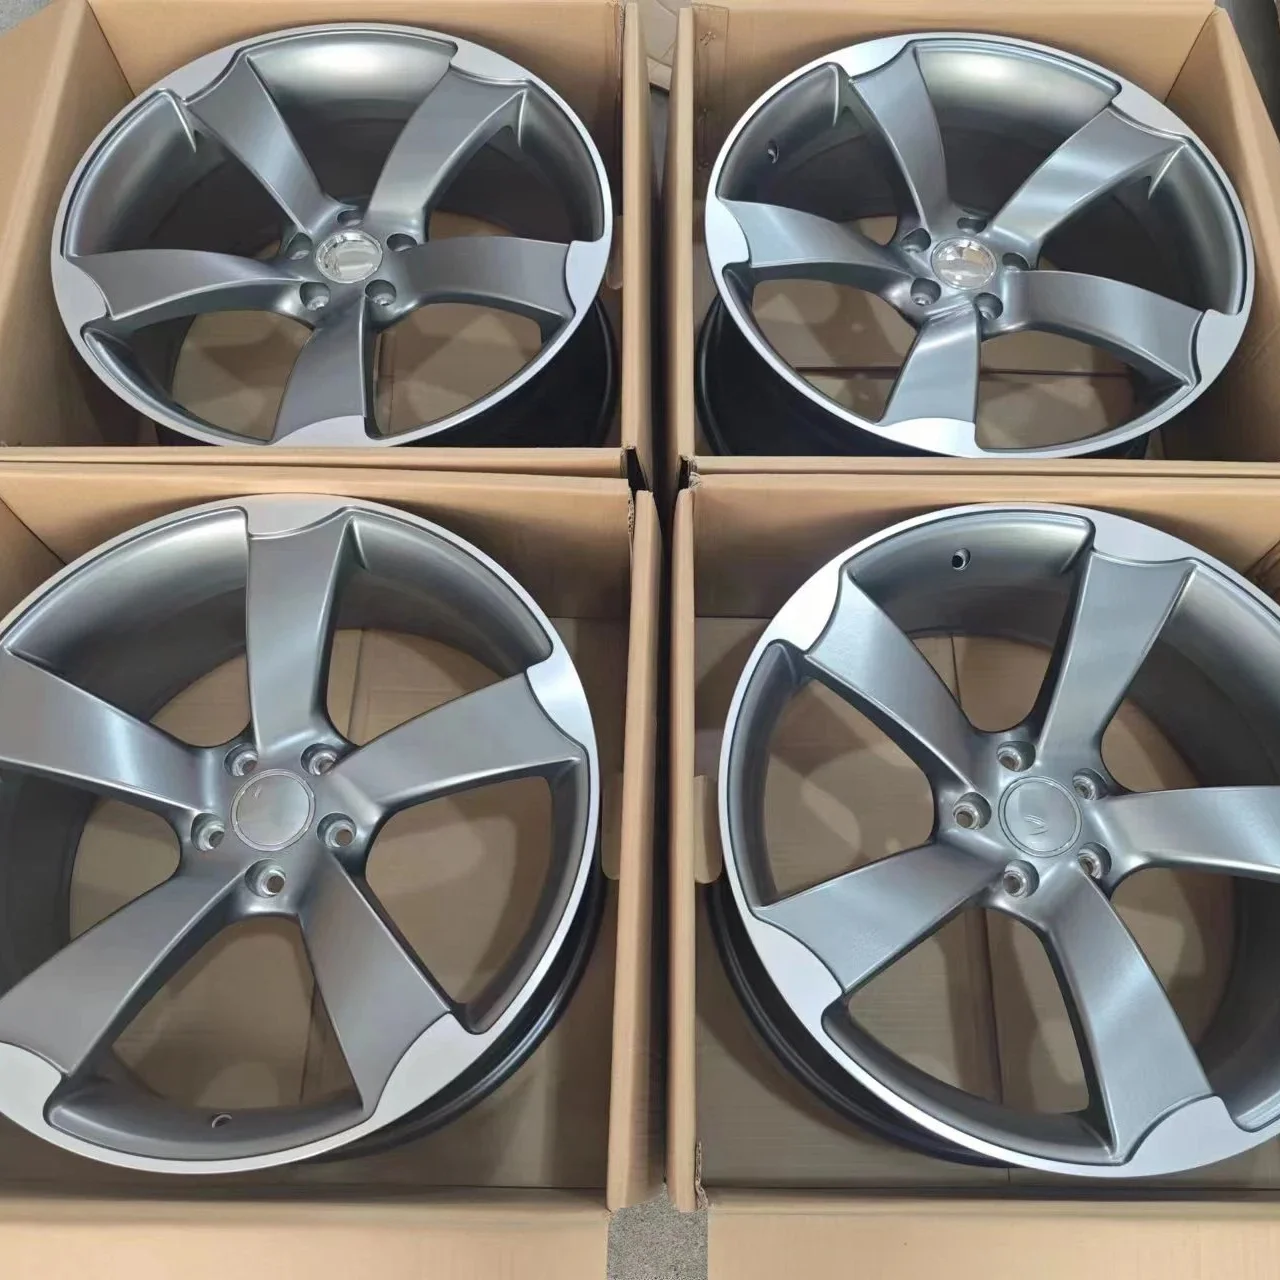 

YQ Hot Sale Concave Wheels 20*9j 5X112 Five Spoke Alloy Passenger Car Wheels For Audi RS6 Q4 Q5 Q8 18 inch Car Rim